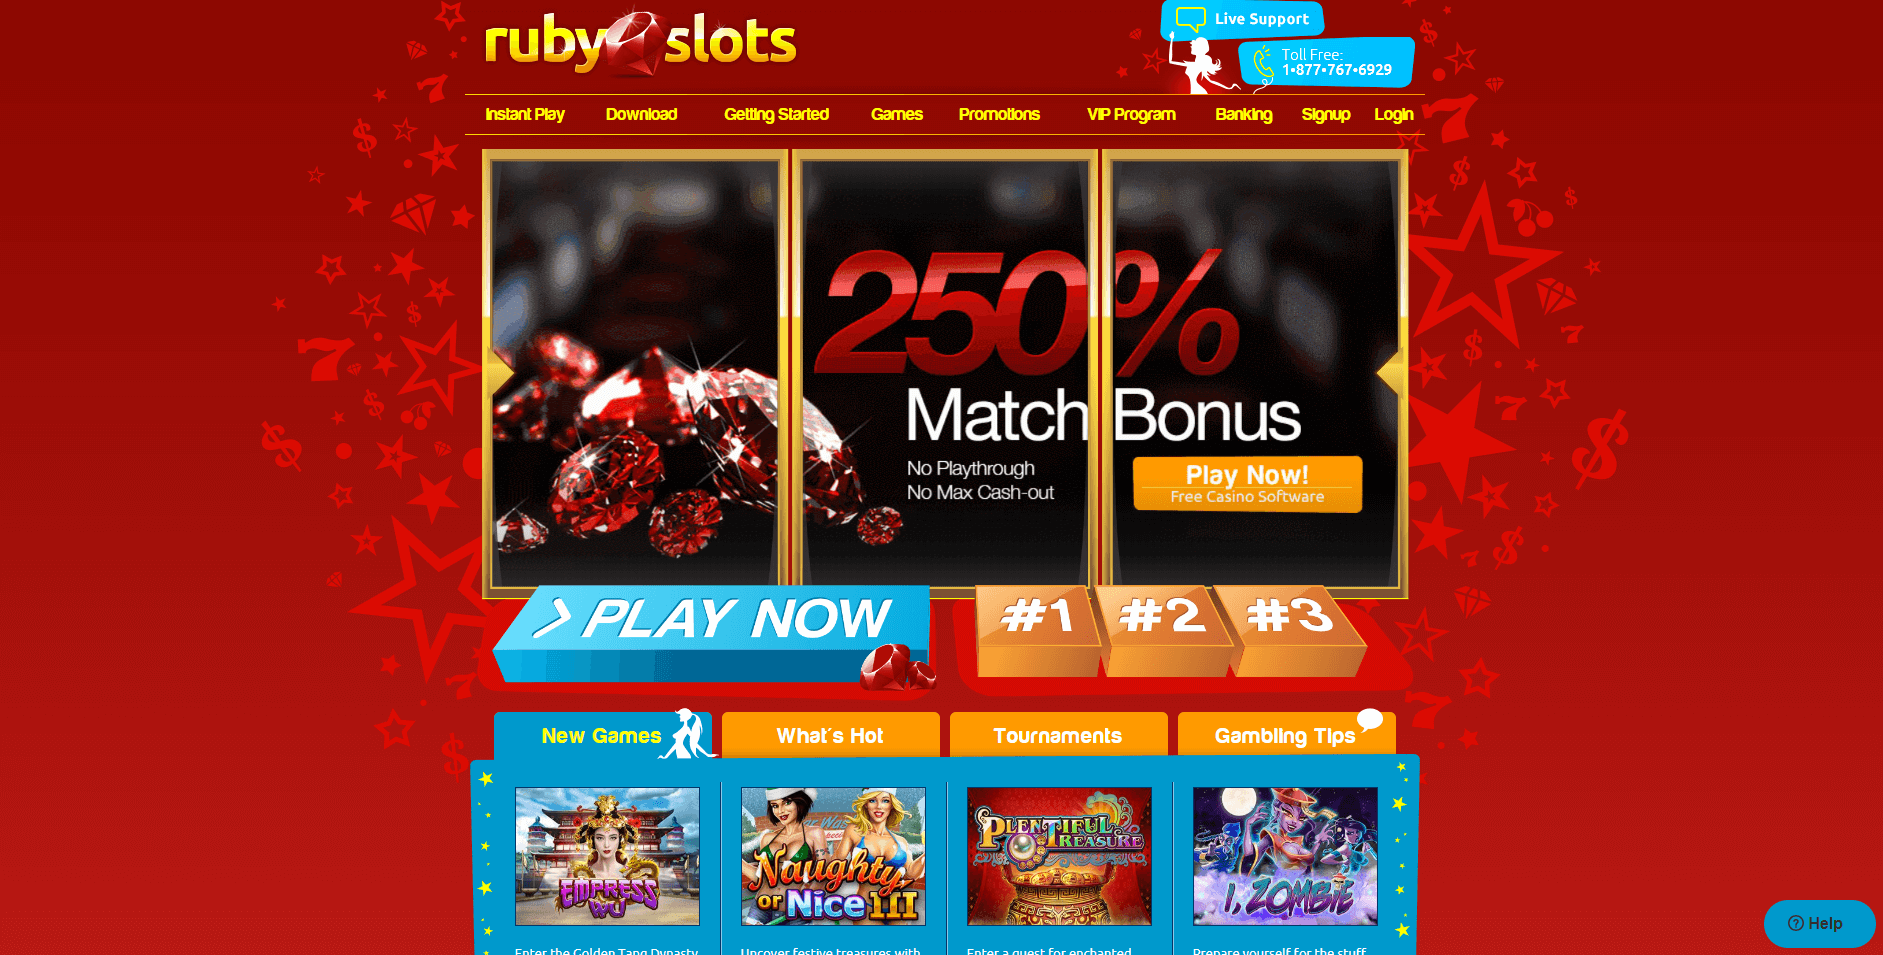 ruby slots no deposit bonus codes